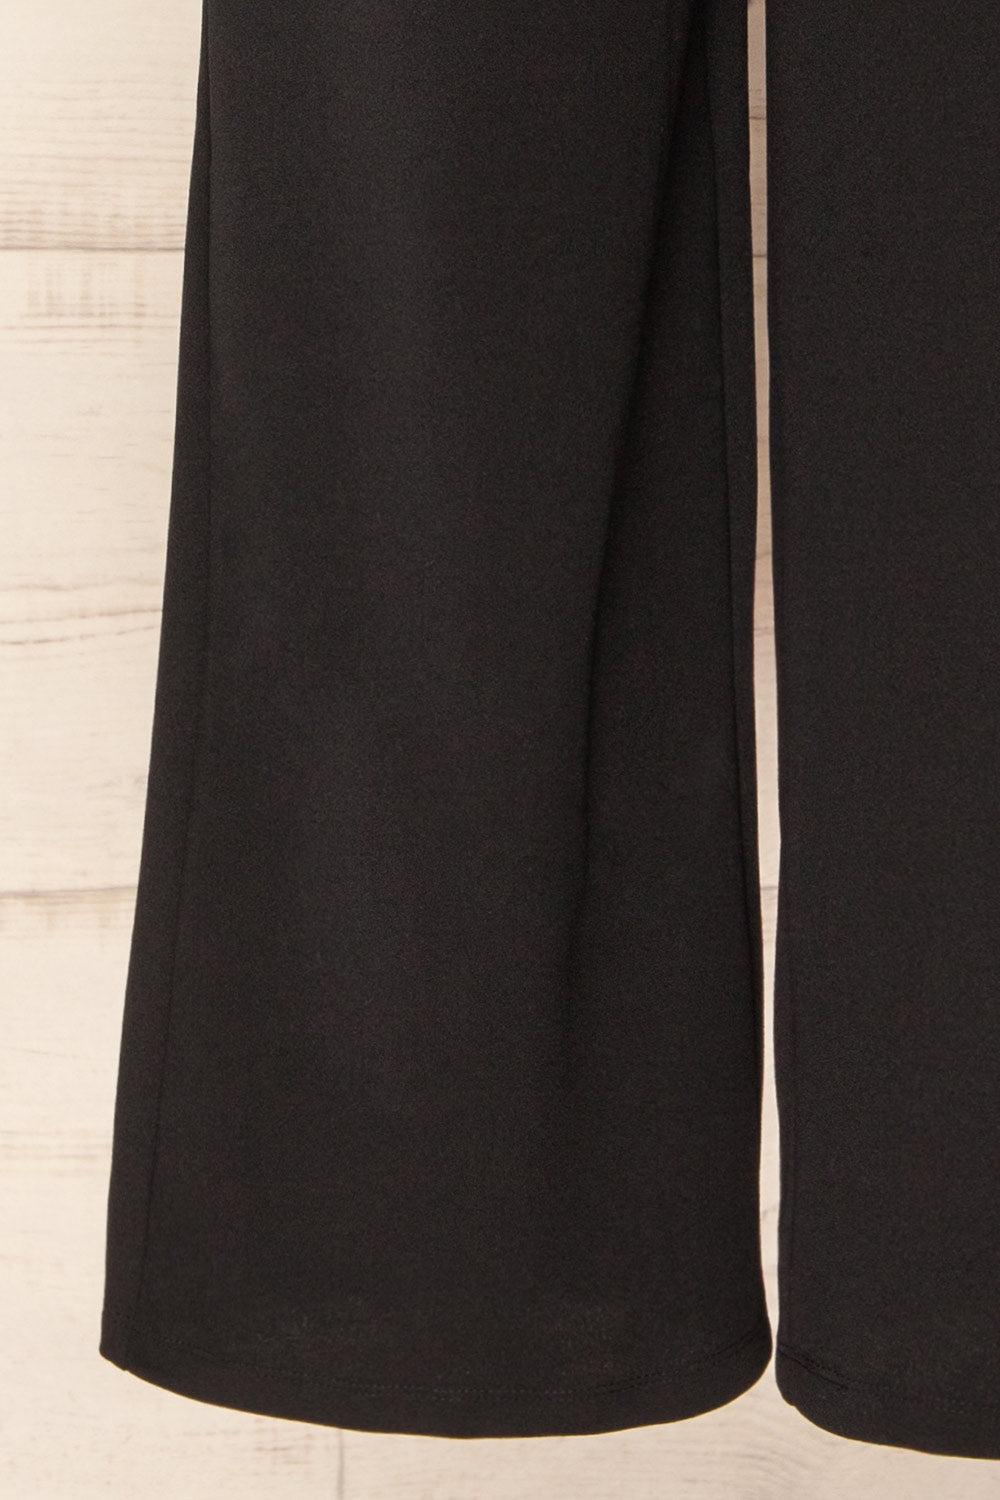 bcbg-burgundy-lace-peplum-top-black-wide-leg-pants-pointed-toe-flats-workwear-office-style-fashion-blog-san-francisco-sf  5 - MEMORANDUM